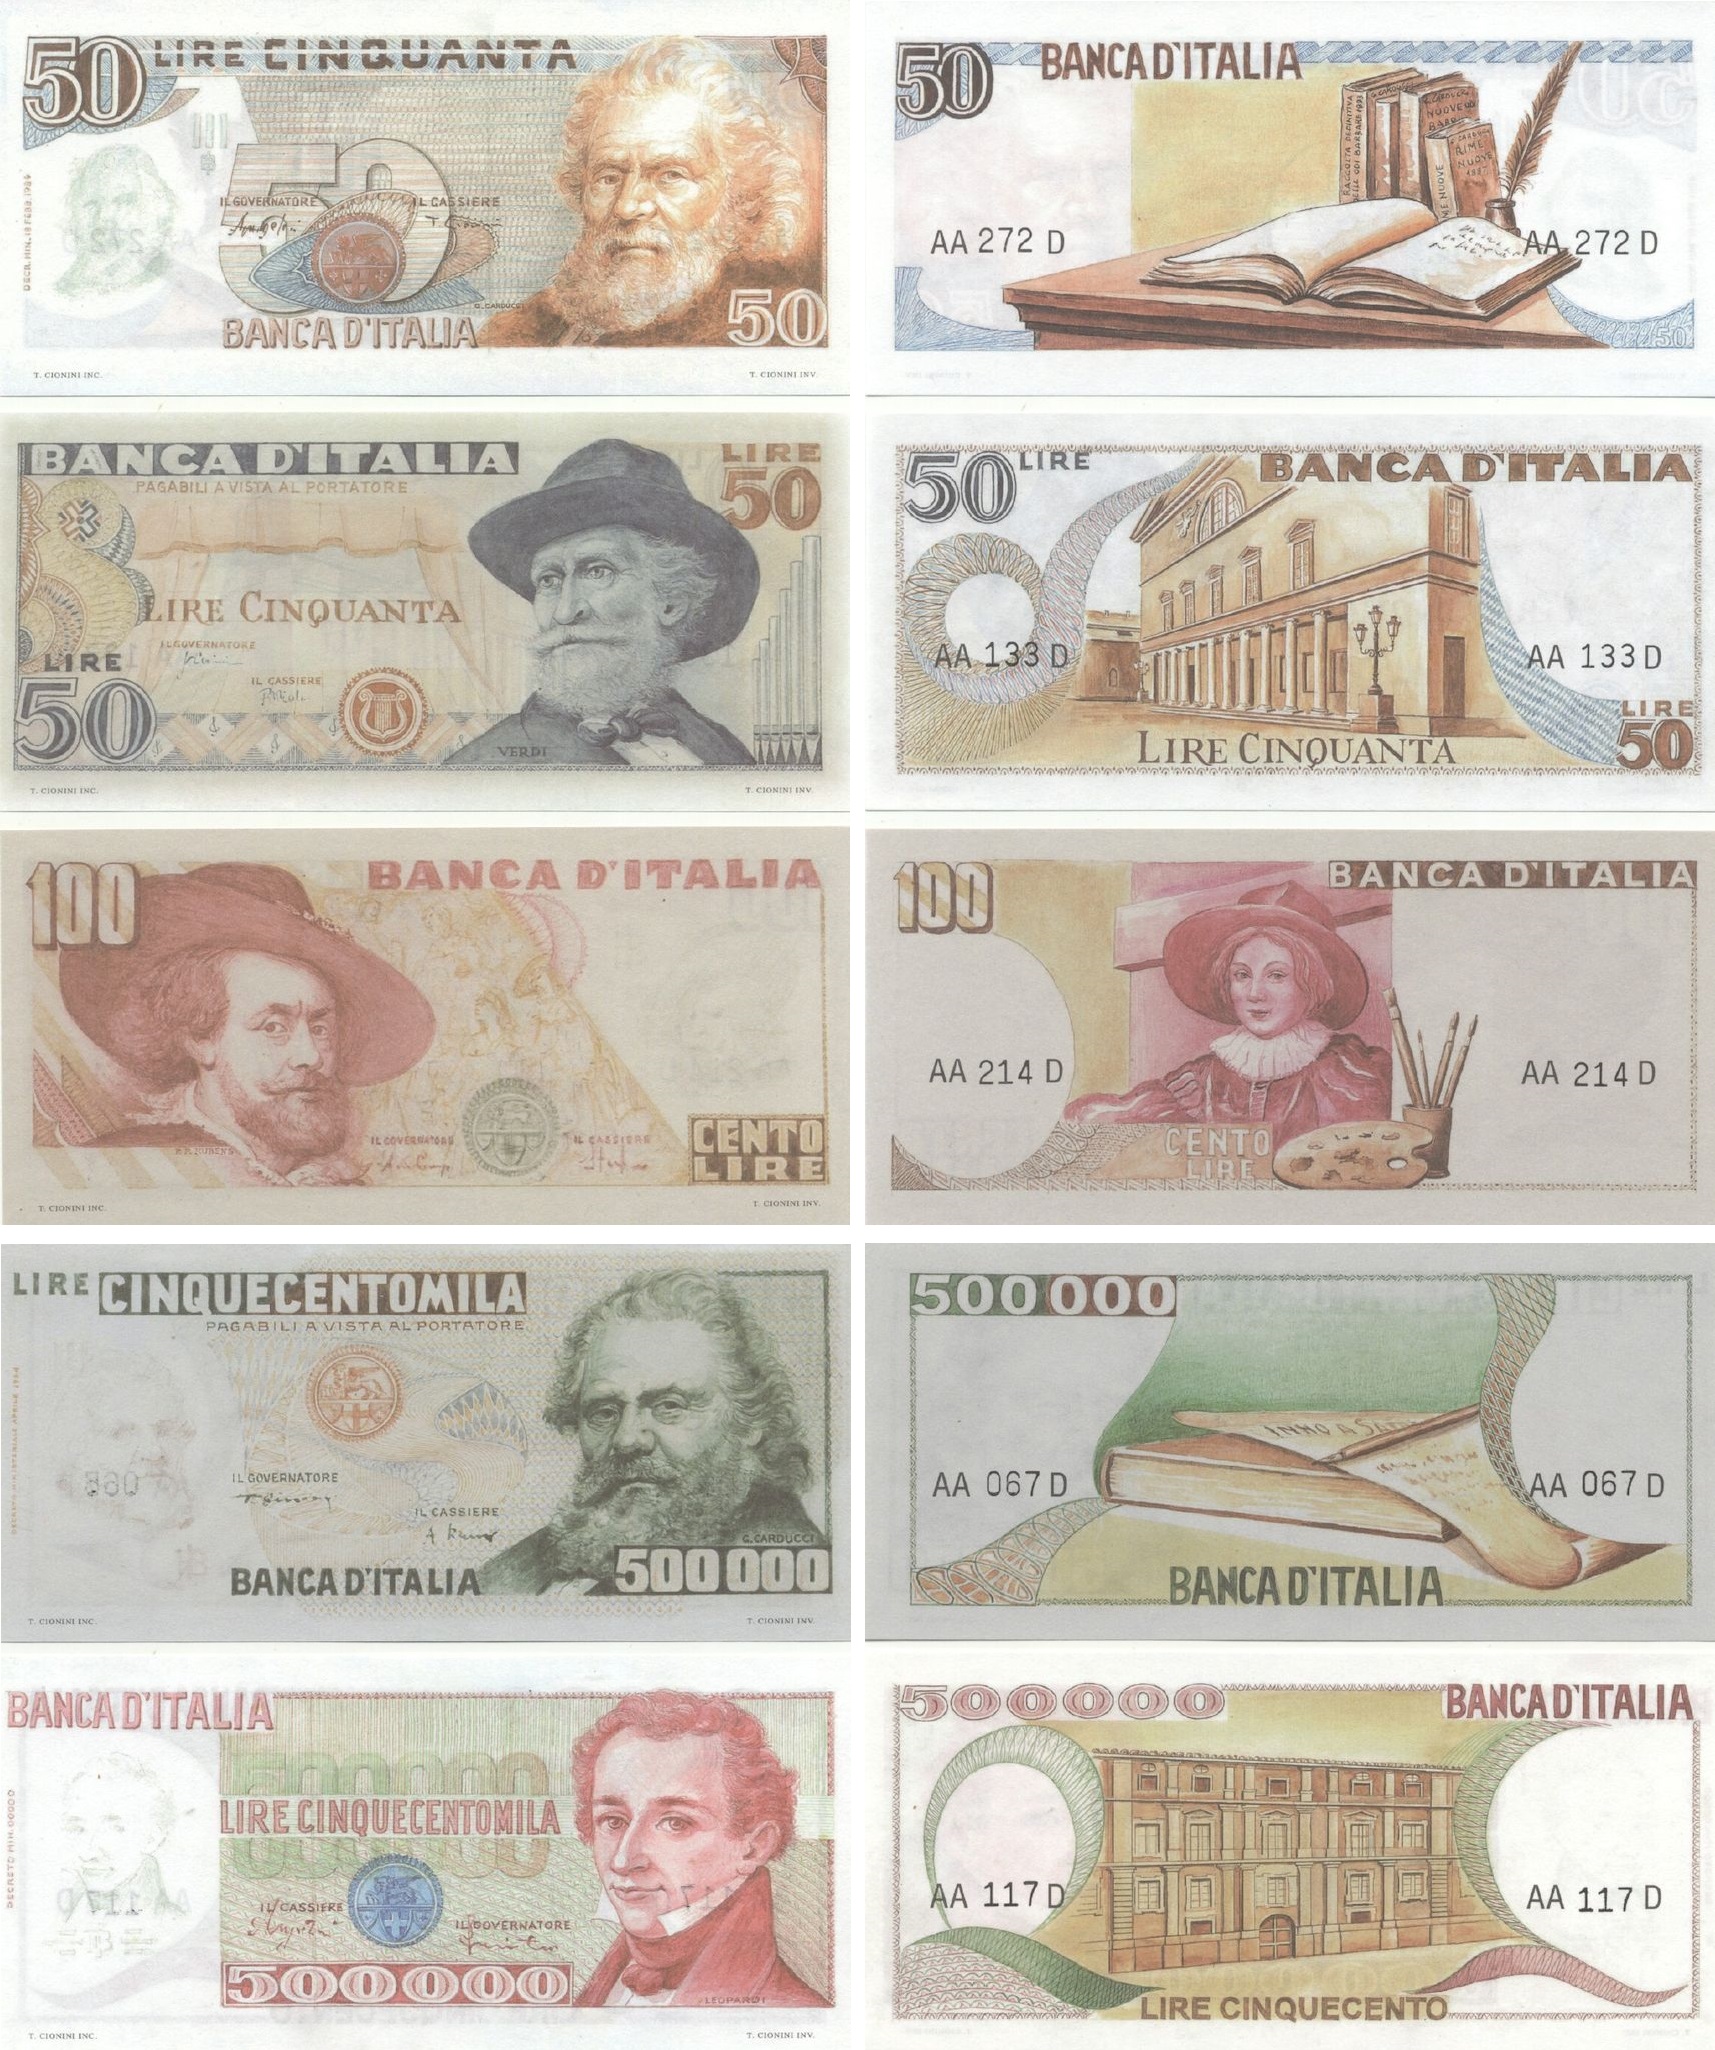 Italy Set of 50, 50, 100, 500000, 500000 Lire 1980s TRENTO CIONINI PROOFS (AA272D, AA133D, AA214D, AA067D, AA117D) UNC